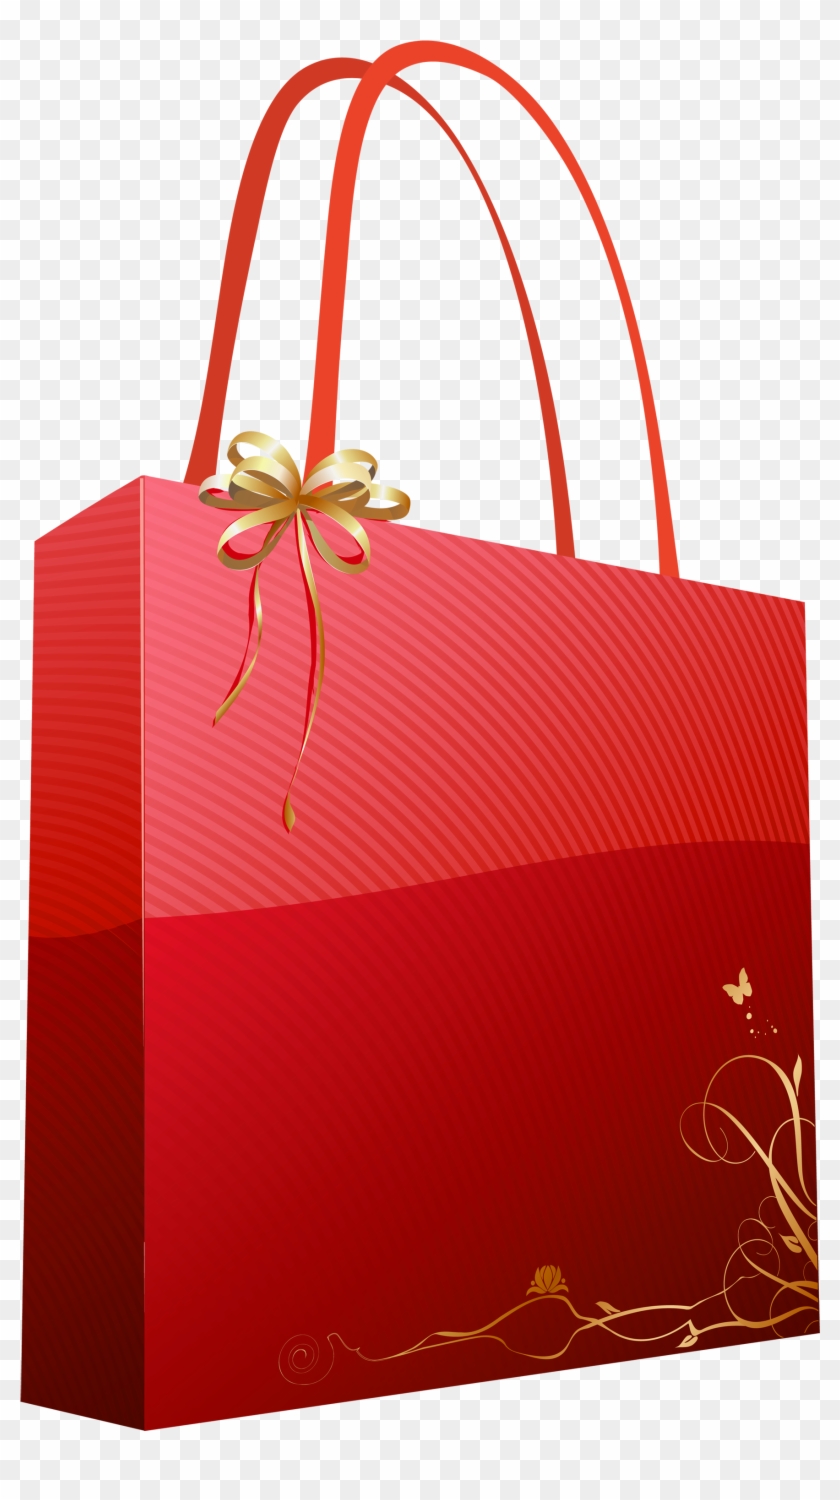 Christmas Bag With Gifts - Gift Bag Clip Art Png #1099256